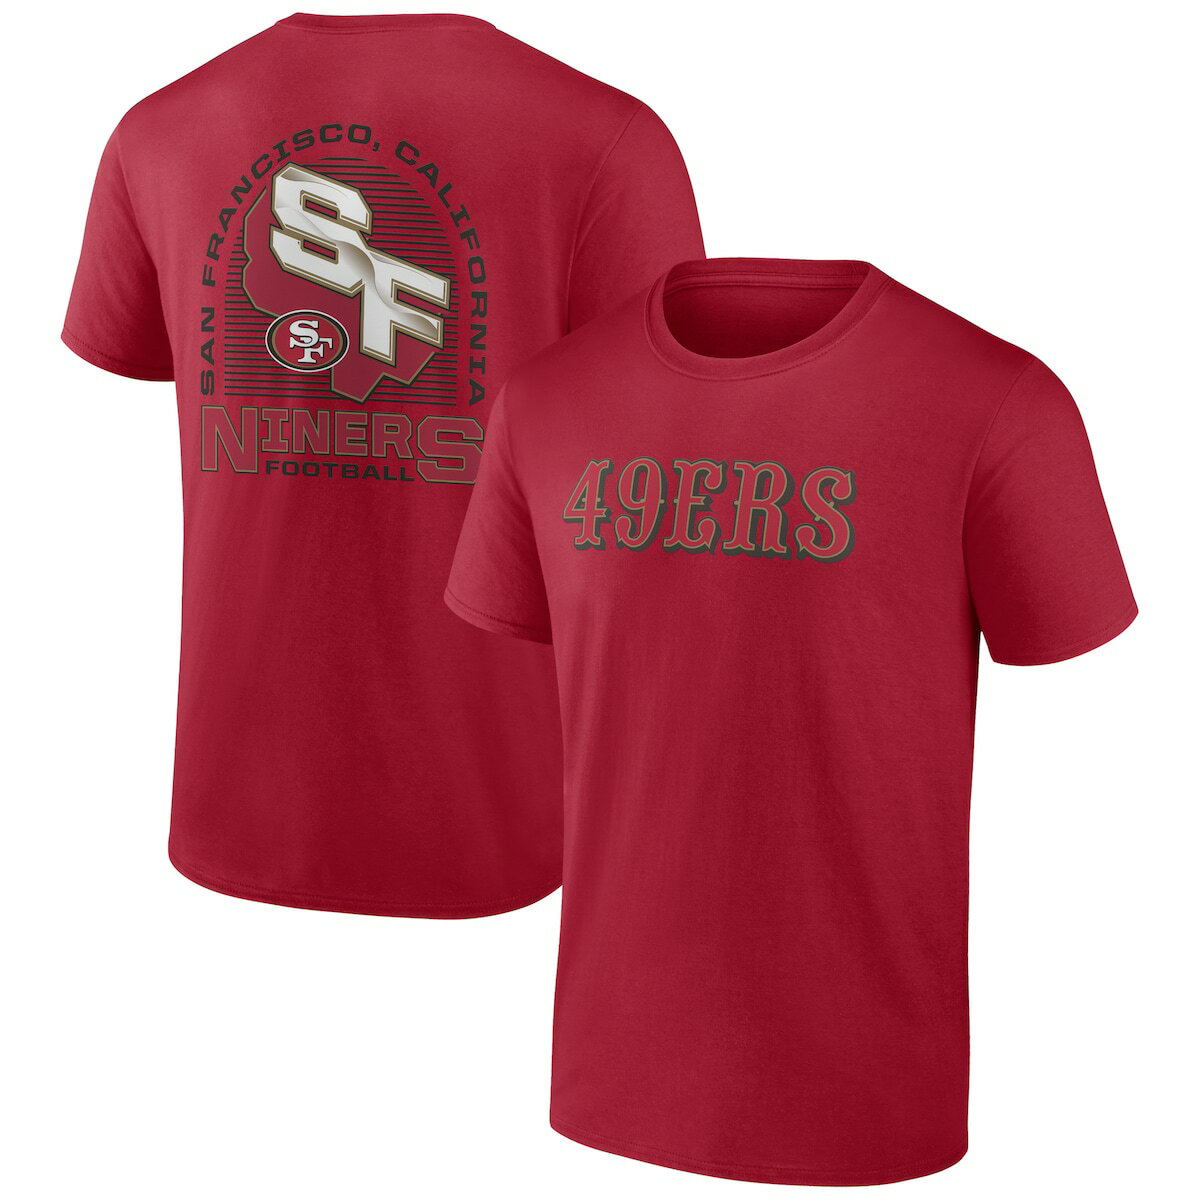 NFL 49ers Tシャツ Profile 